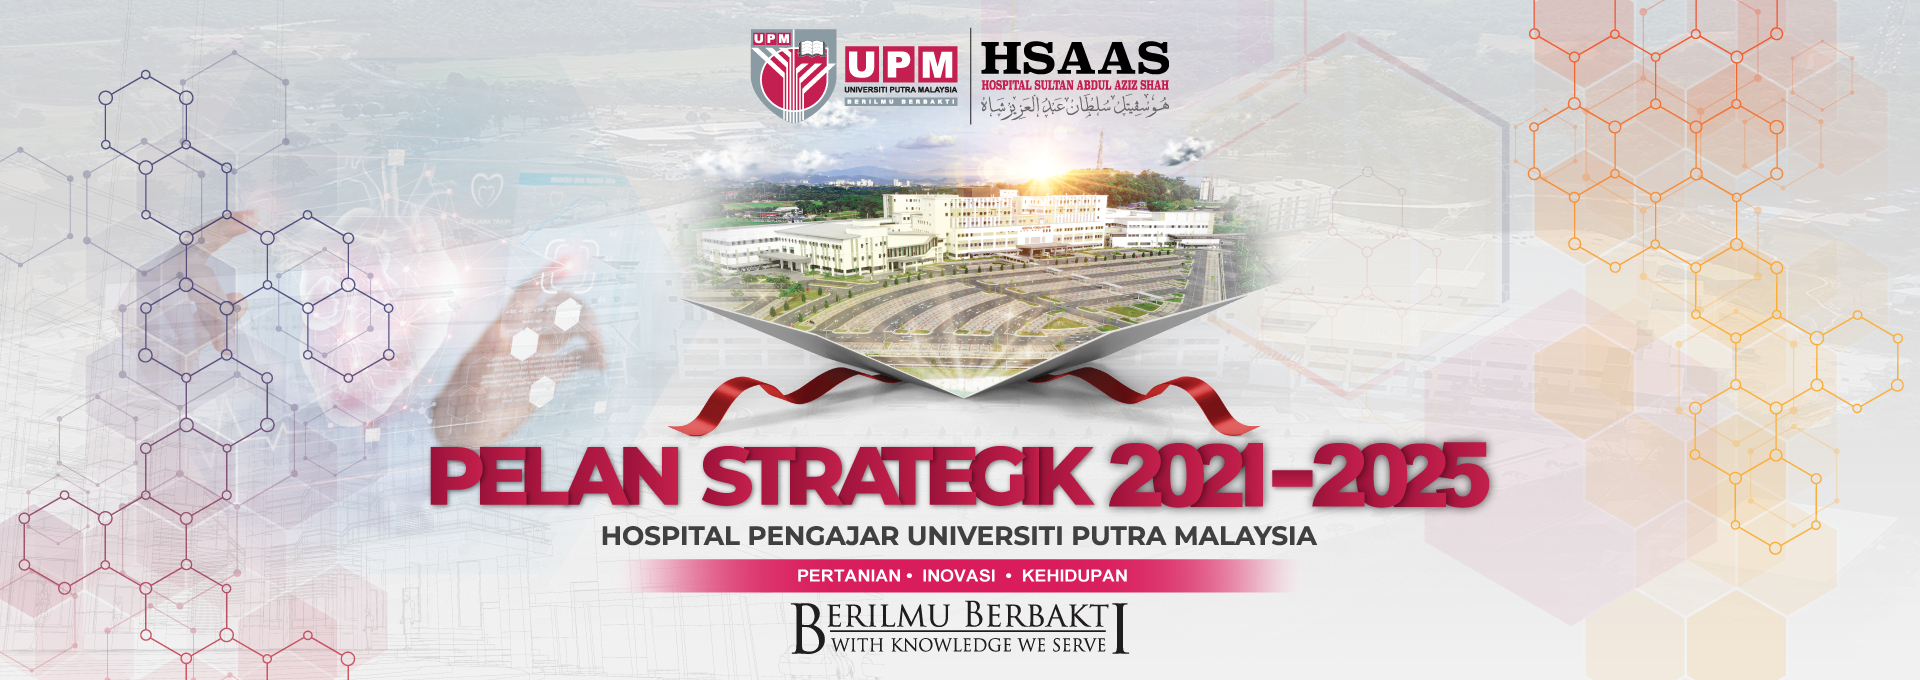 Pelan Strategik Hospital Pengajar UPM